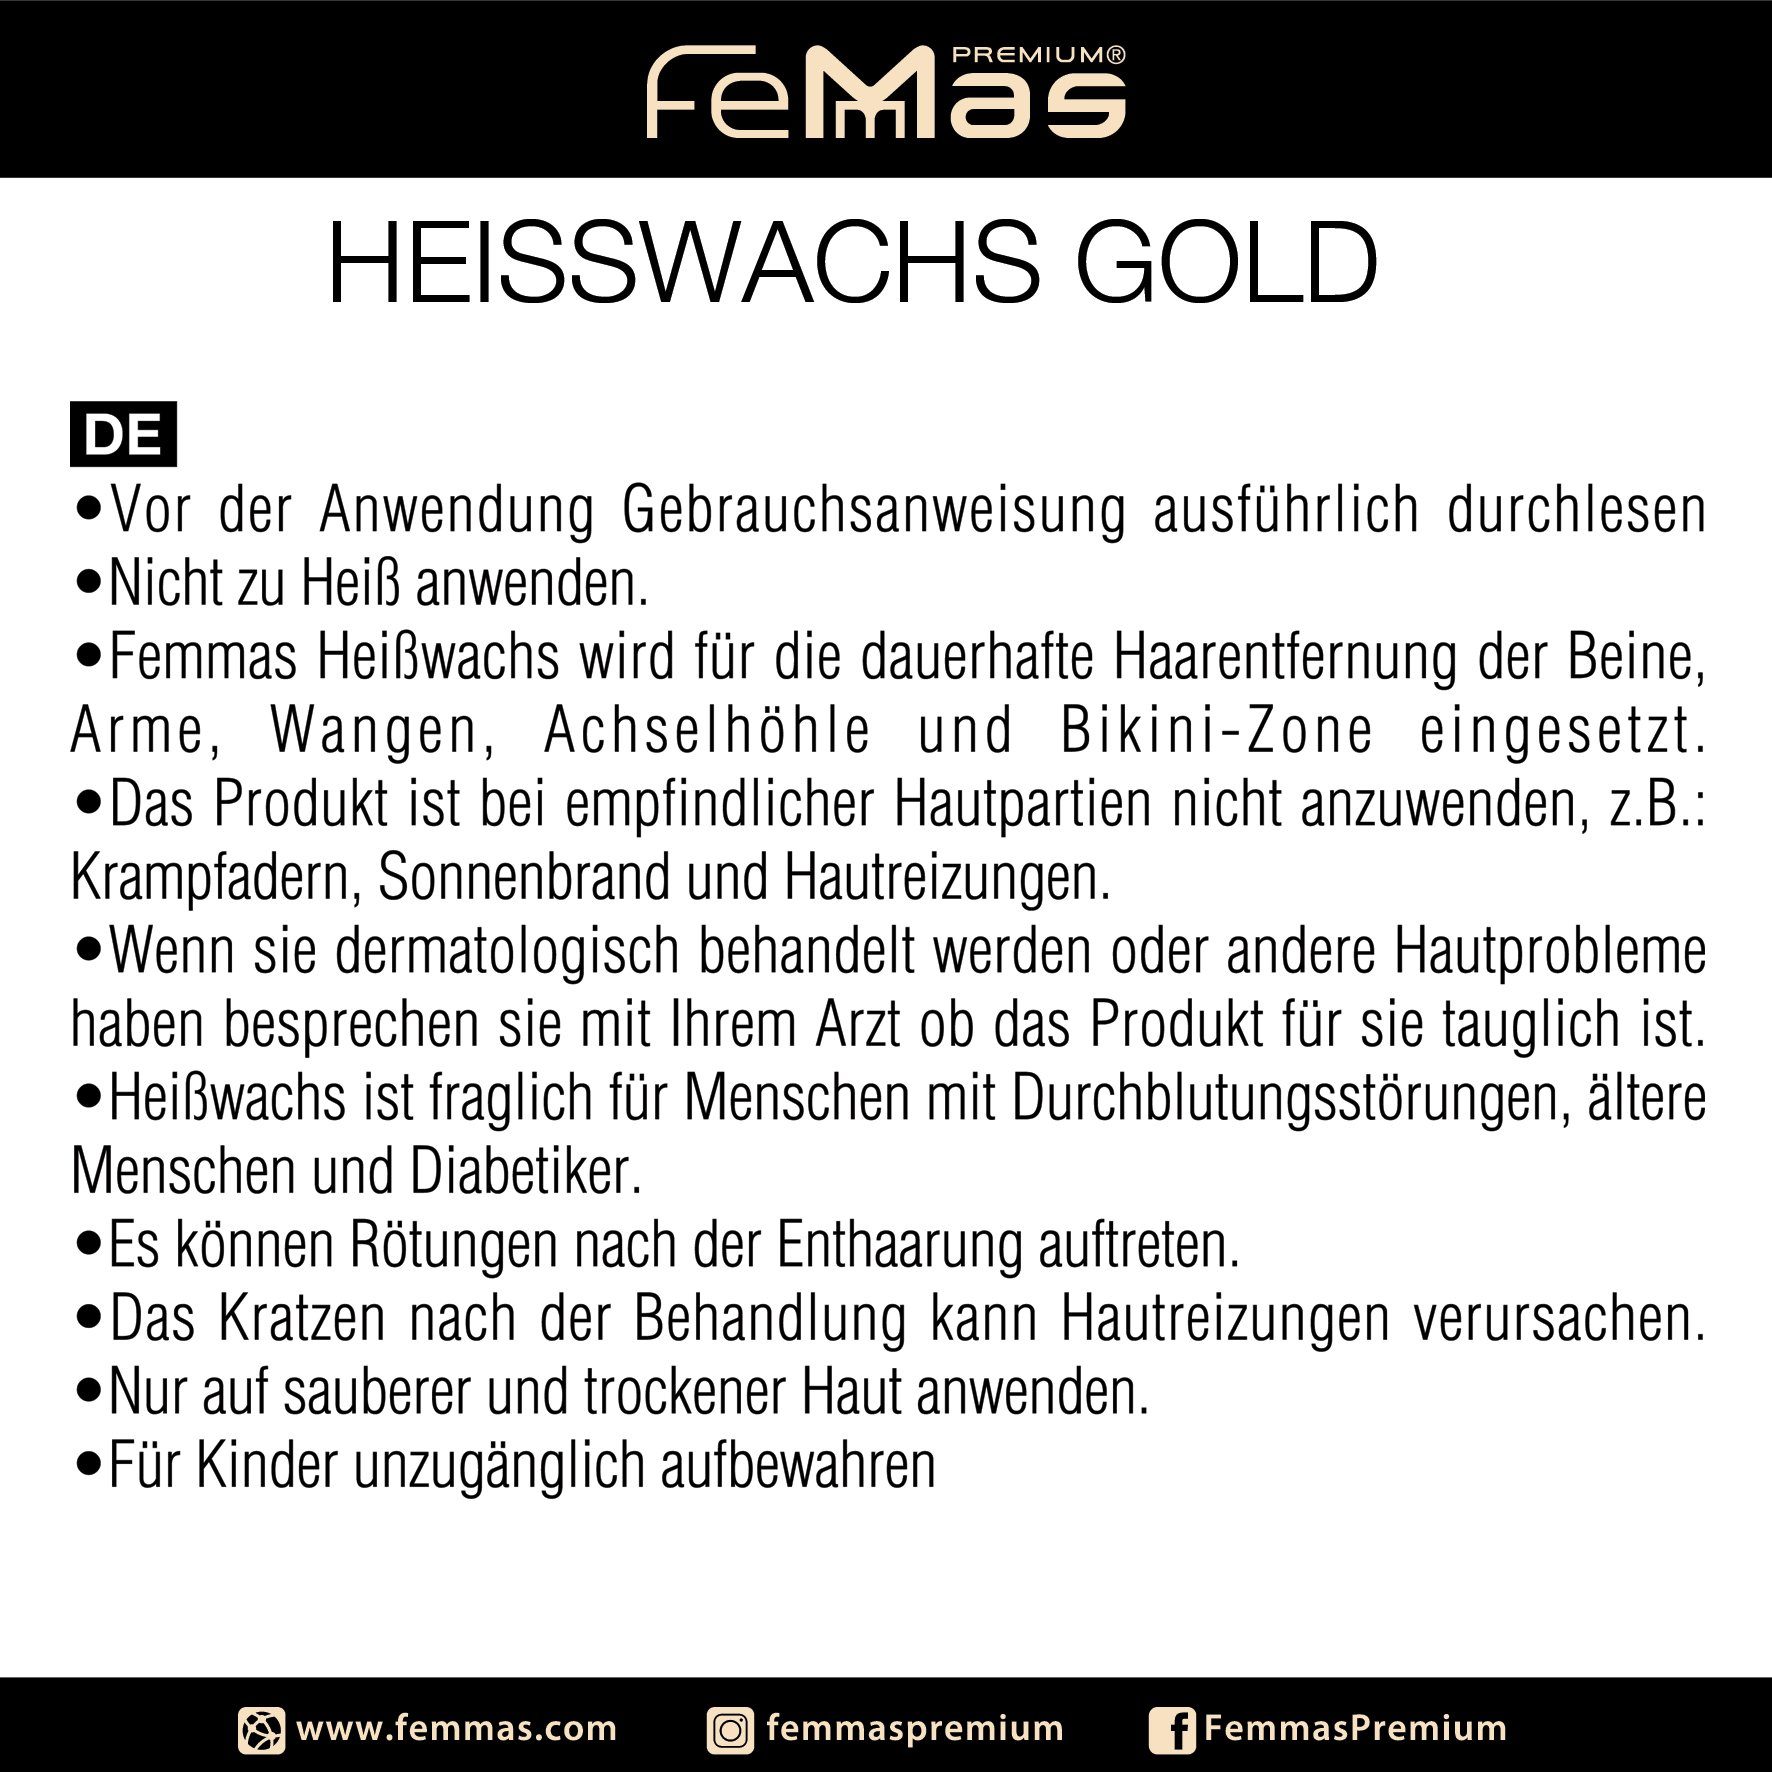 Enthaarungswachs 500ml Heisswachs FemMas Premium Gold Femmas